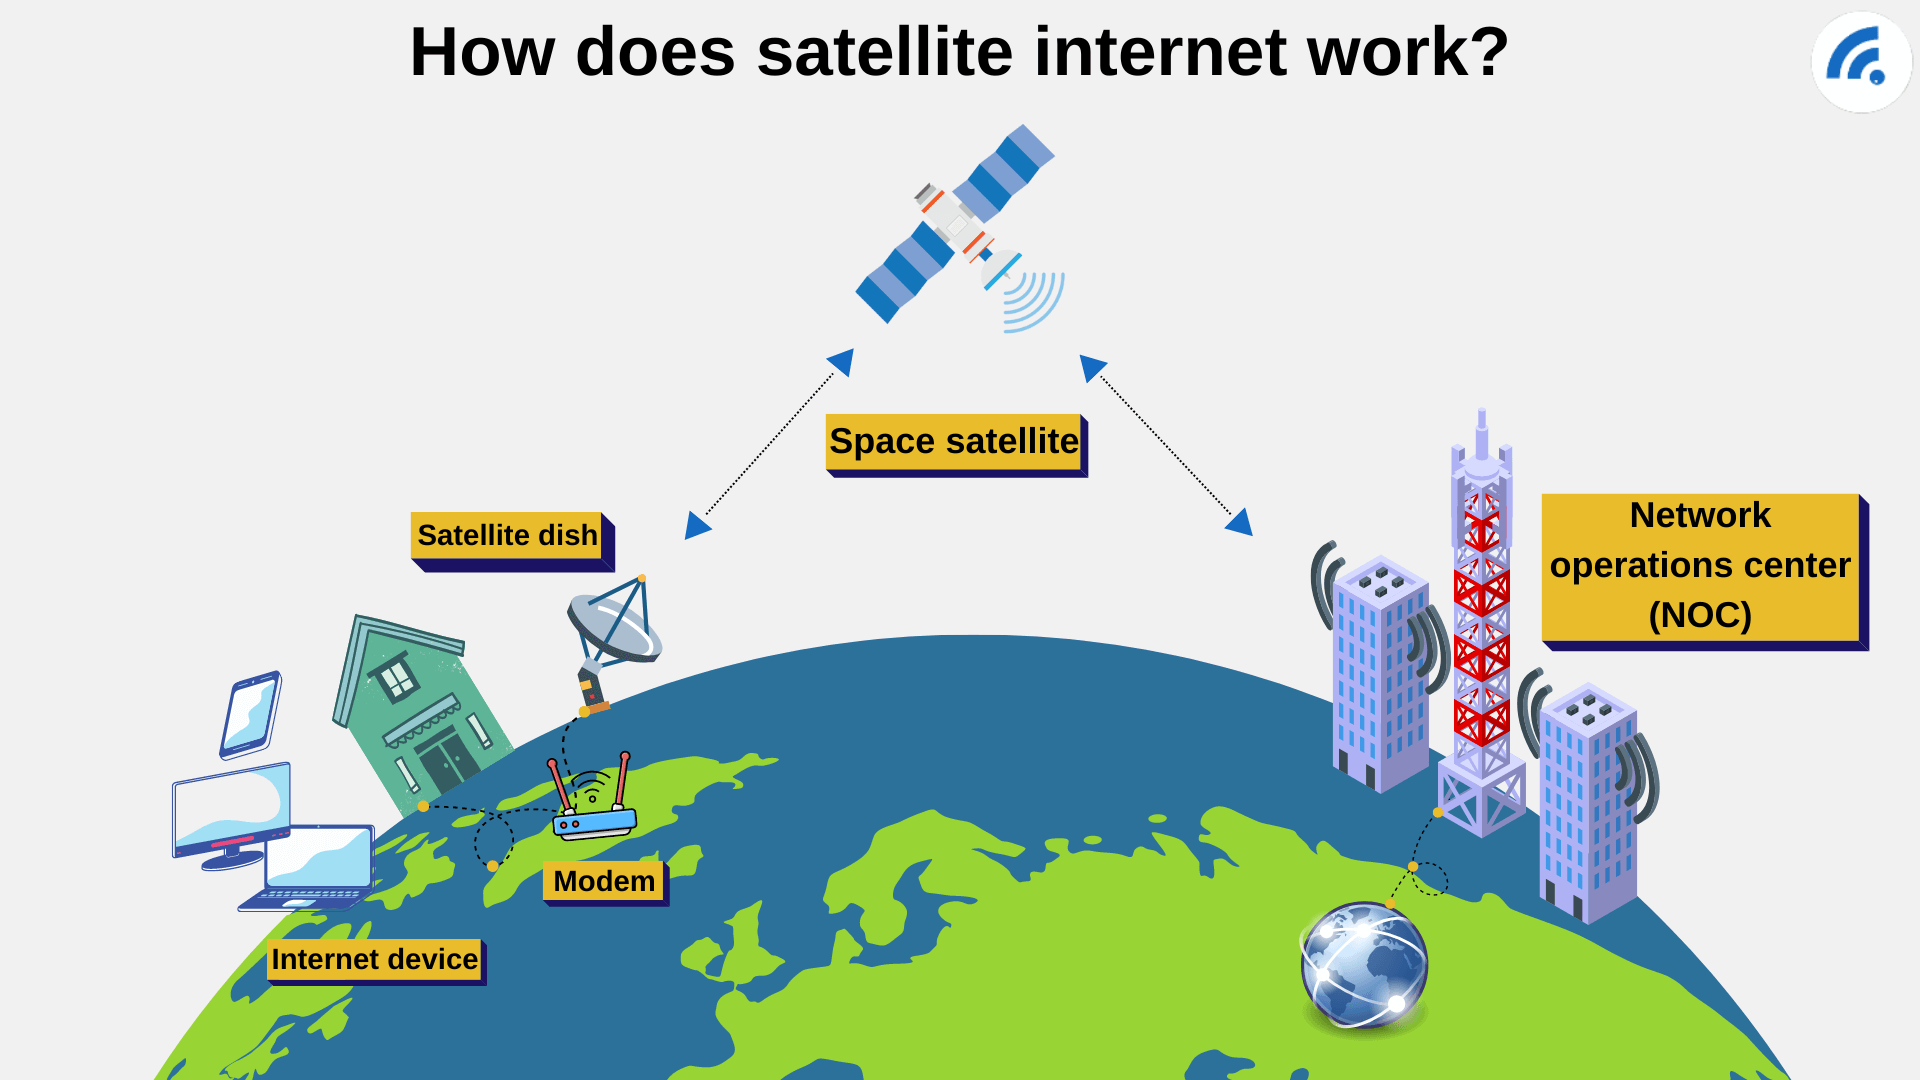 An illustration of how satellite internet works